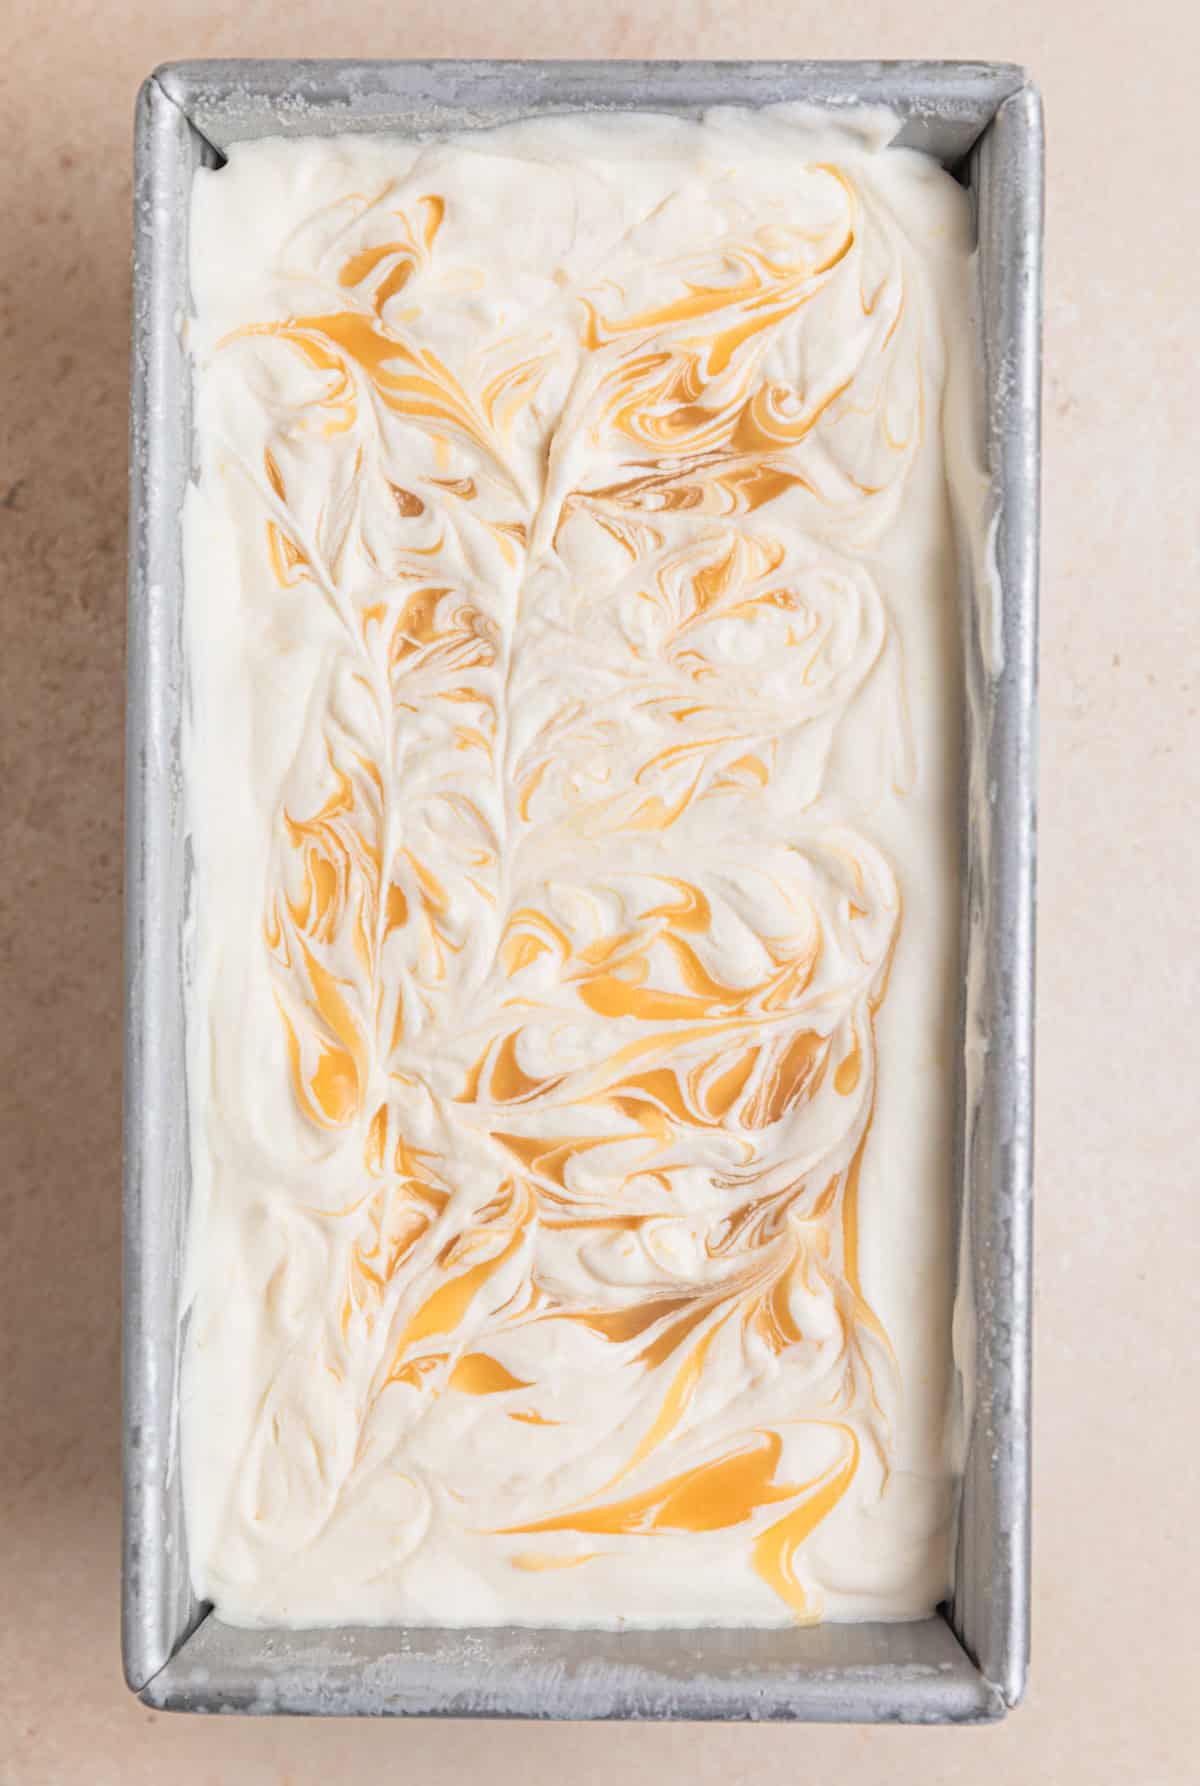 Frozen homemade lemon ice cream in container with lemon curd swirls.